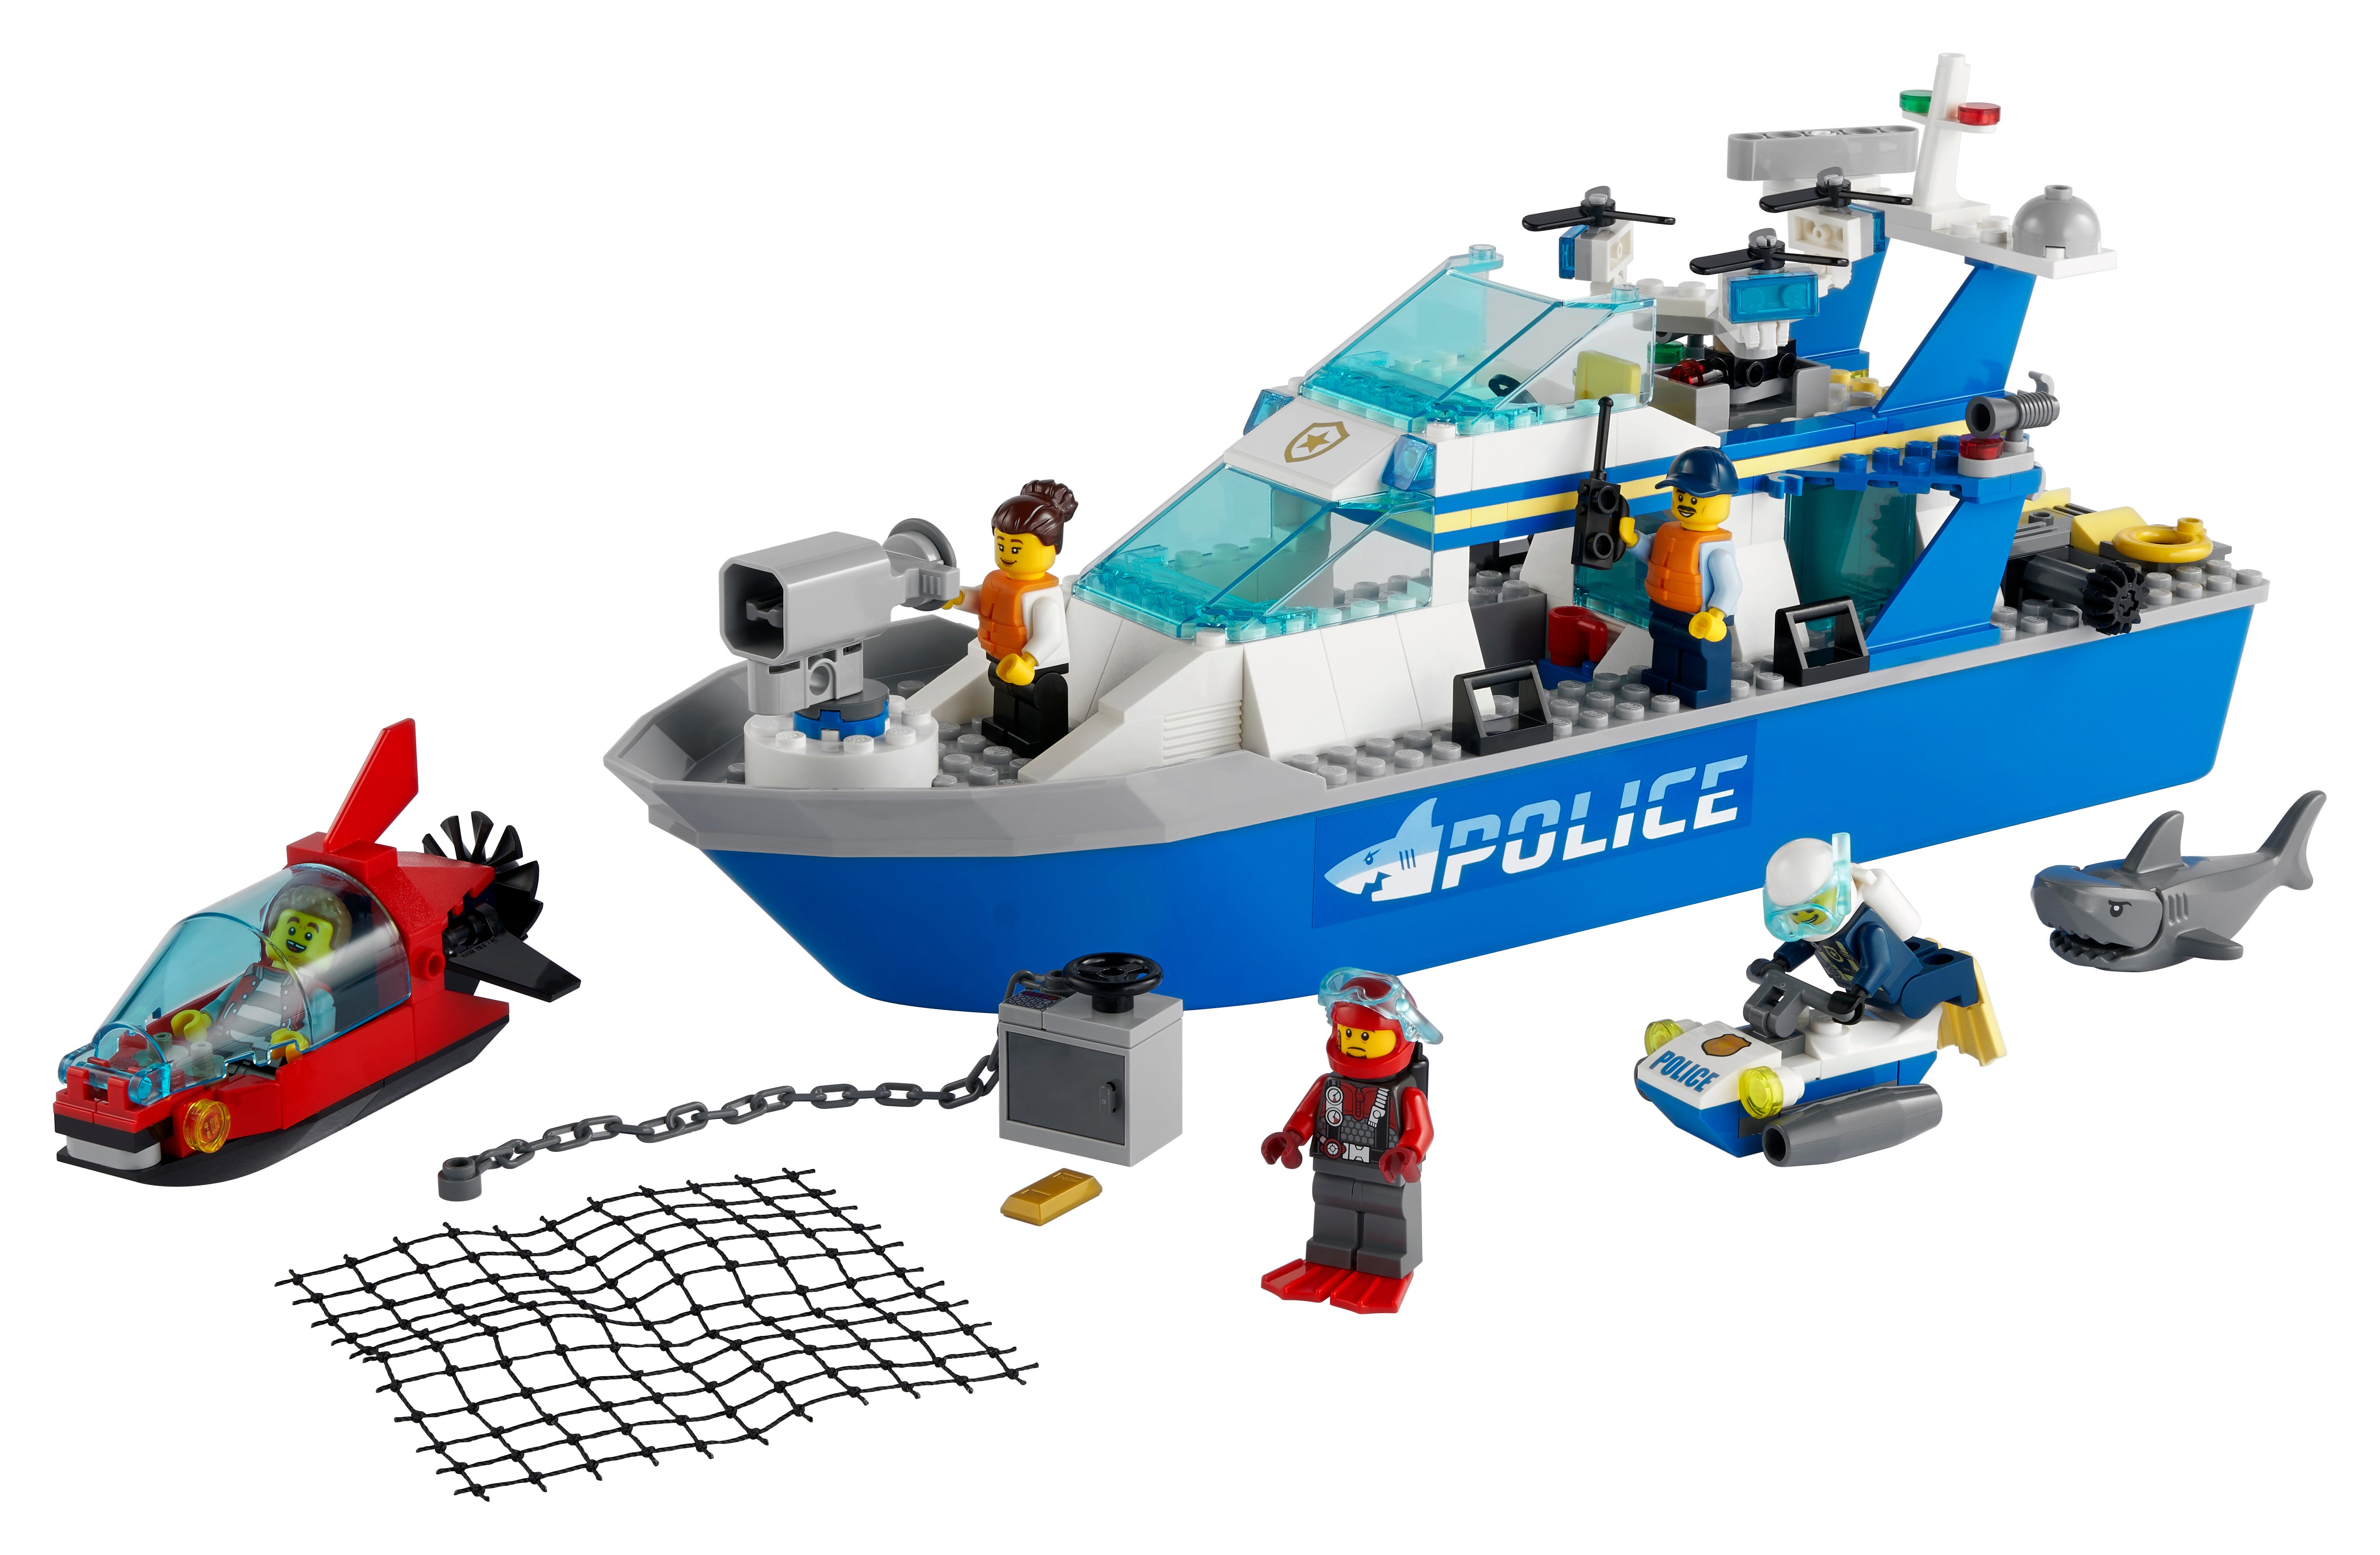 Politie patrouilleboot